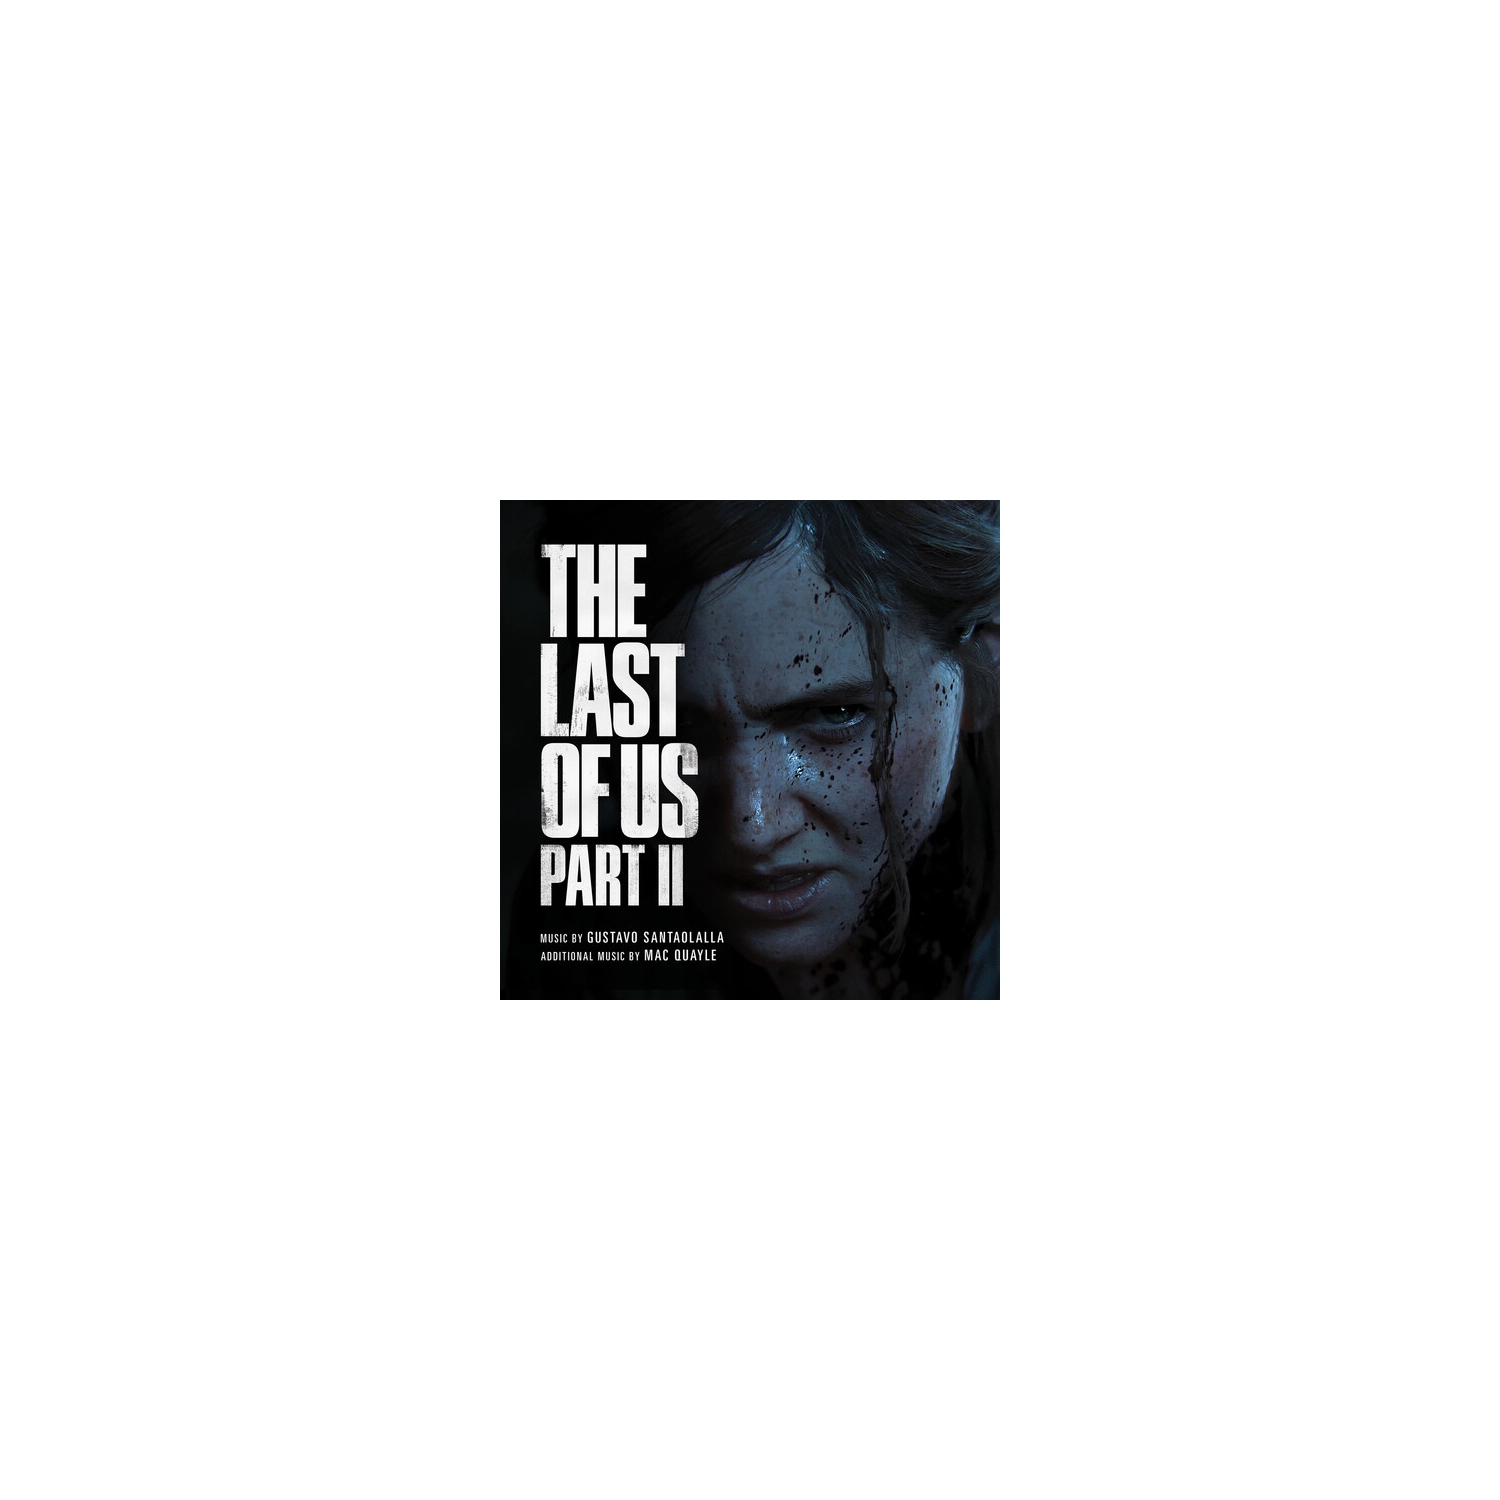 THE LAST OF US PART II (ORIGINAL SOUNDTRACK) (INTERNATIONAL DIGIPAK VERSION) - GUSTAVO SANTAOLALLA & MAC QUAYLE [CD]